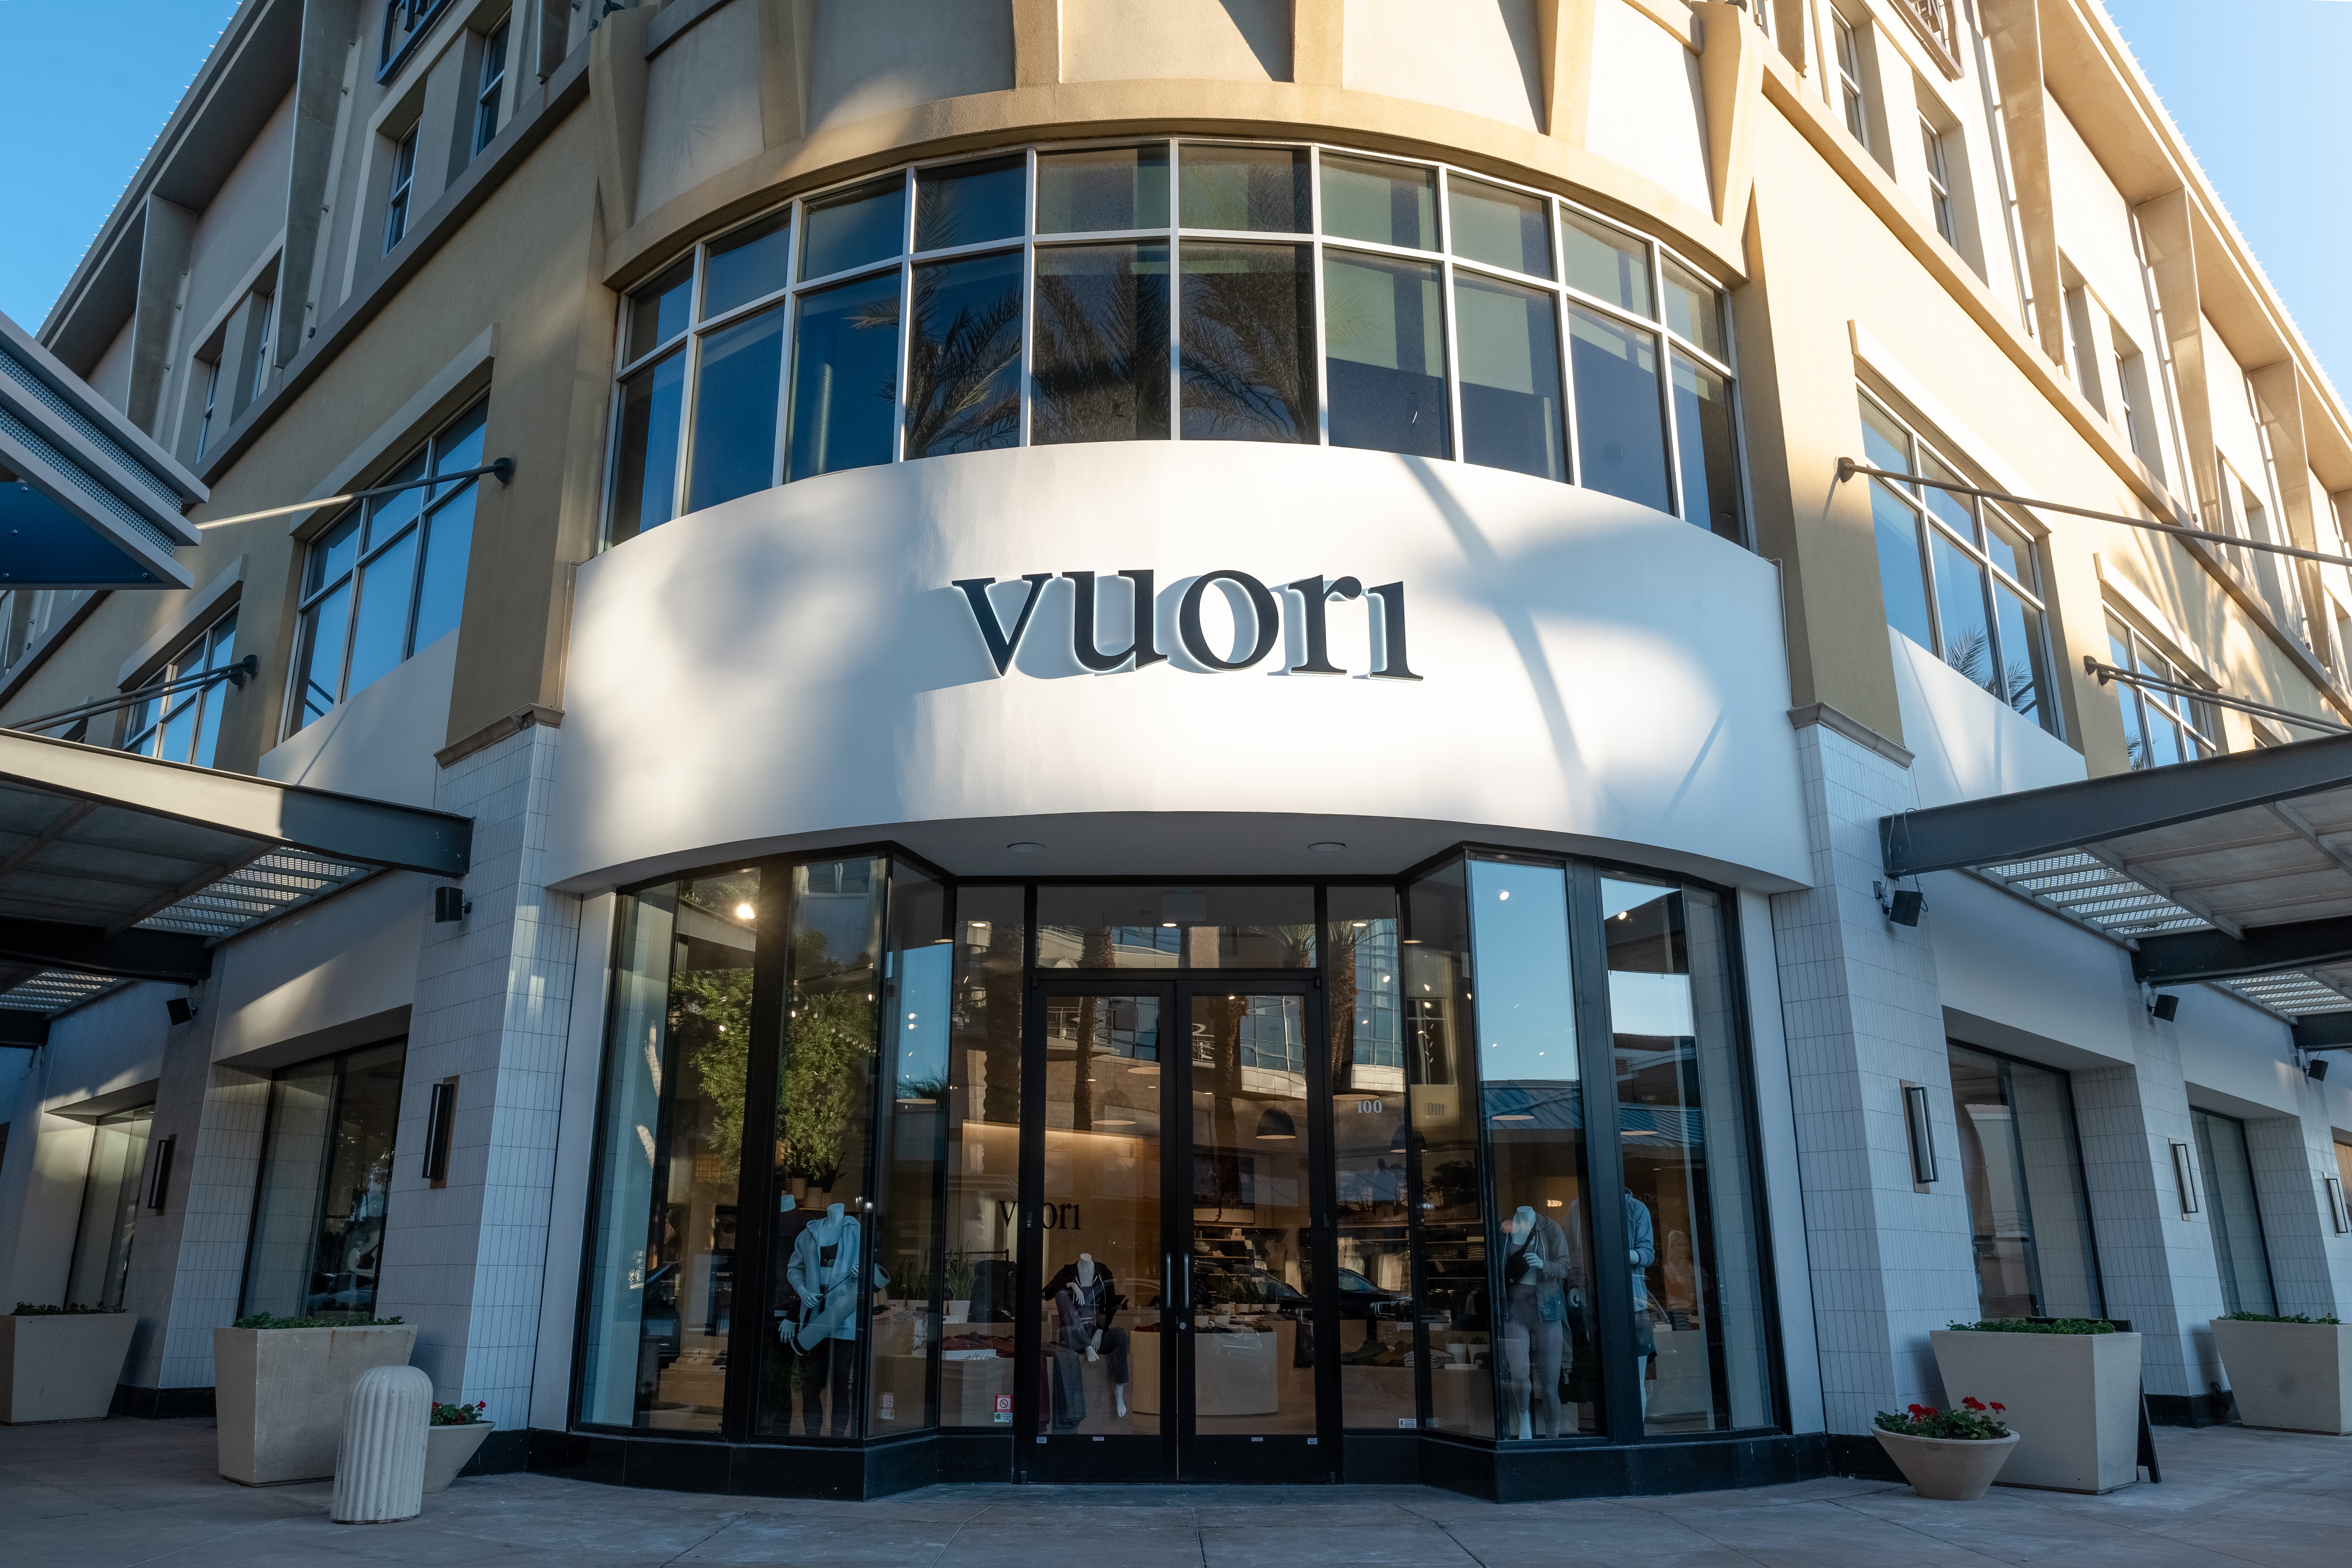 A storefront of the Vuori store